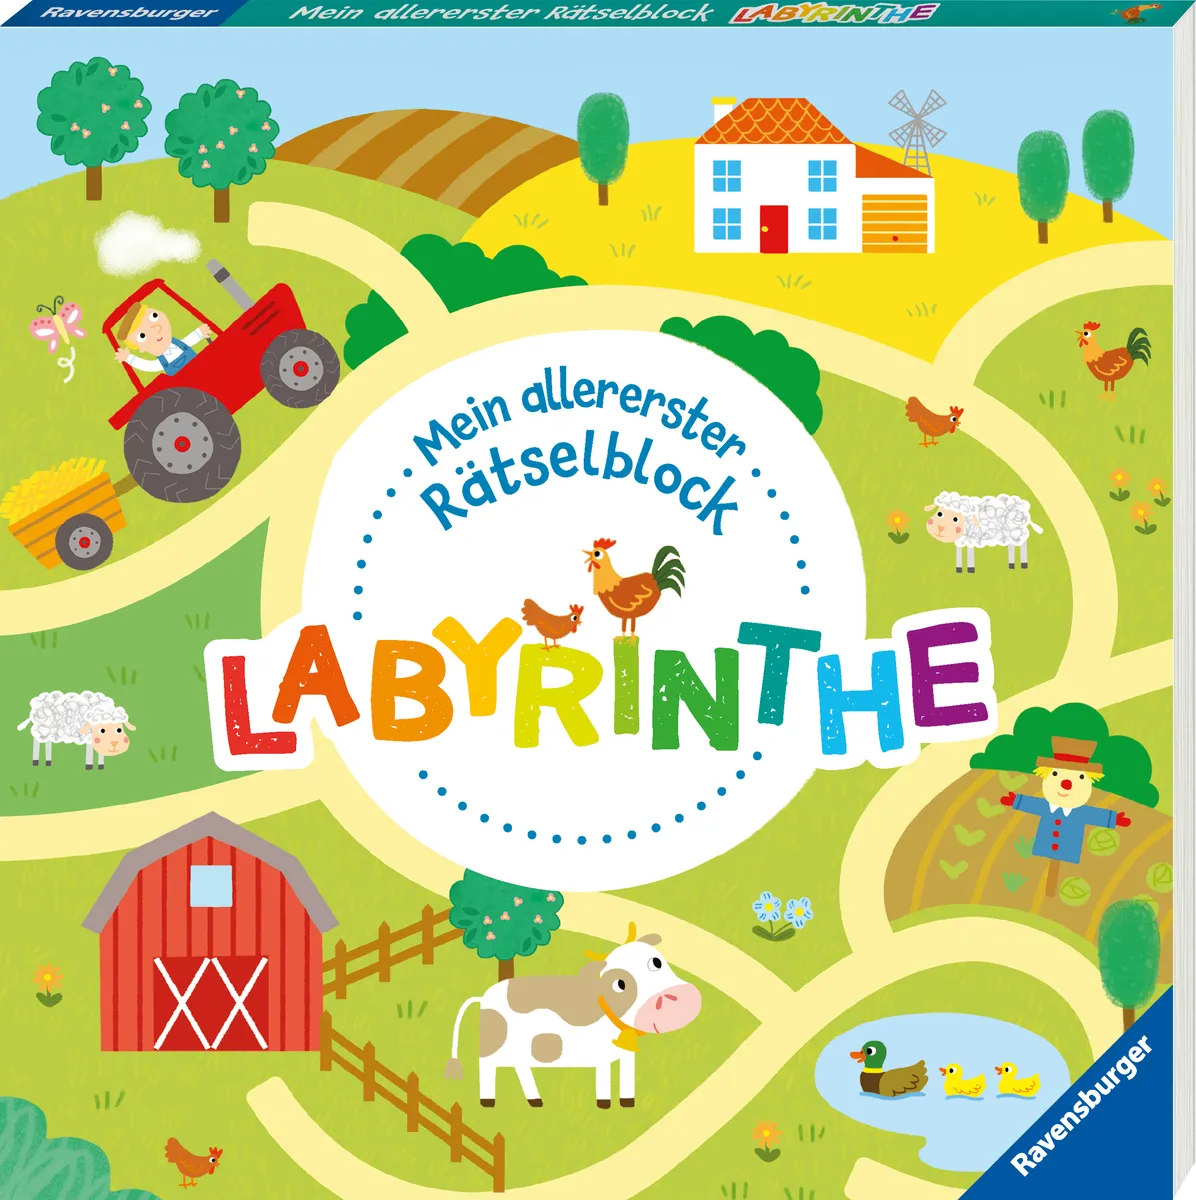 Ravensburger Mein allererster Rätselblock - Lfromyrinthe - Rätselblock für Kinder from 3 Jahren